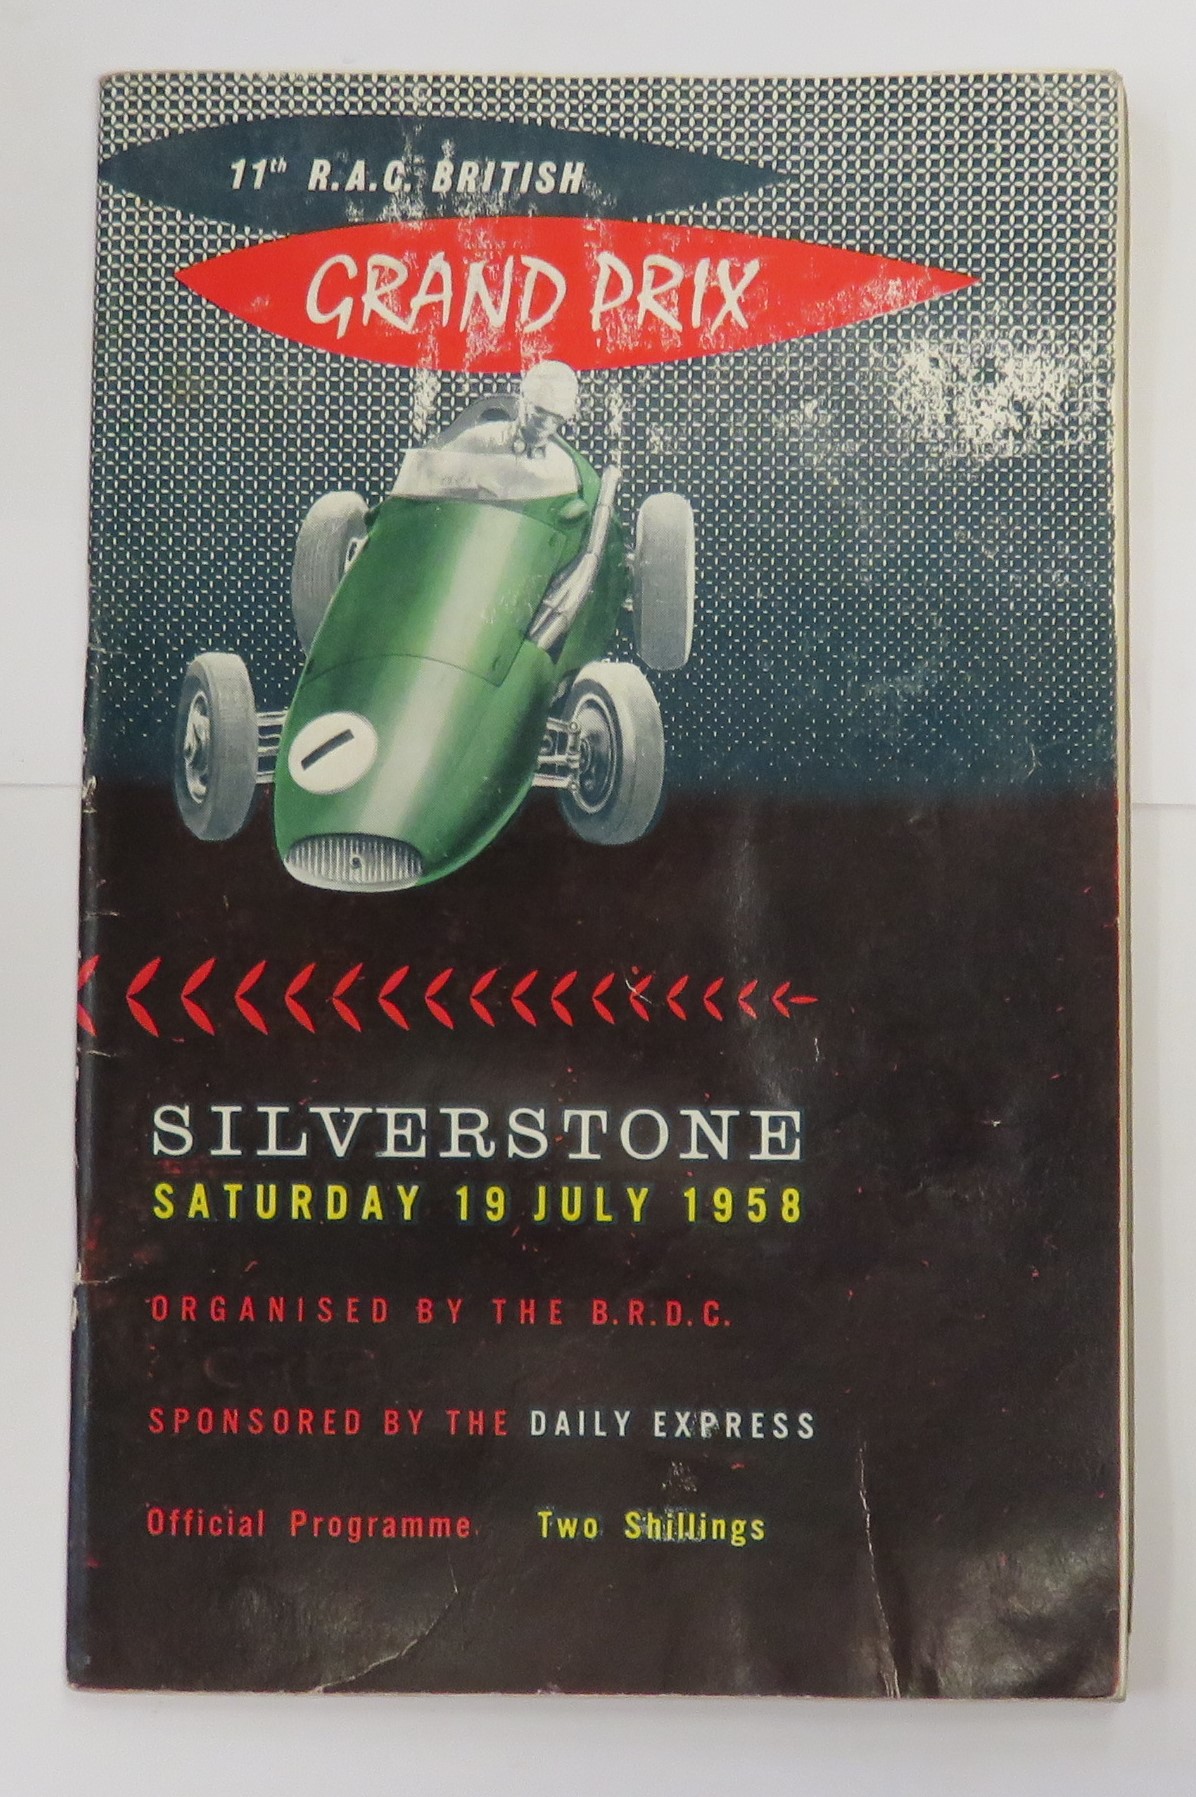 11th R.A.C. British Grand Prix Silverstone Saturday 19 July 1958